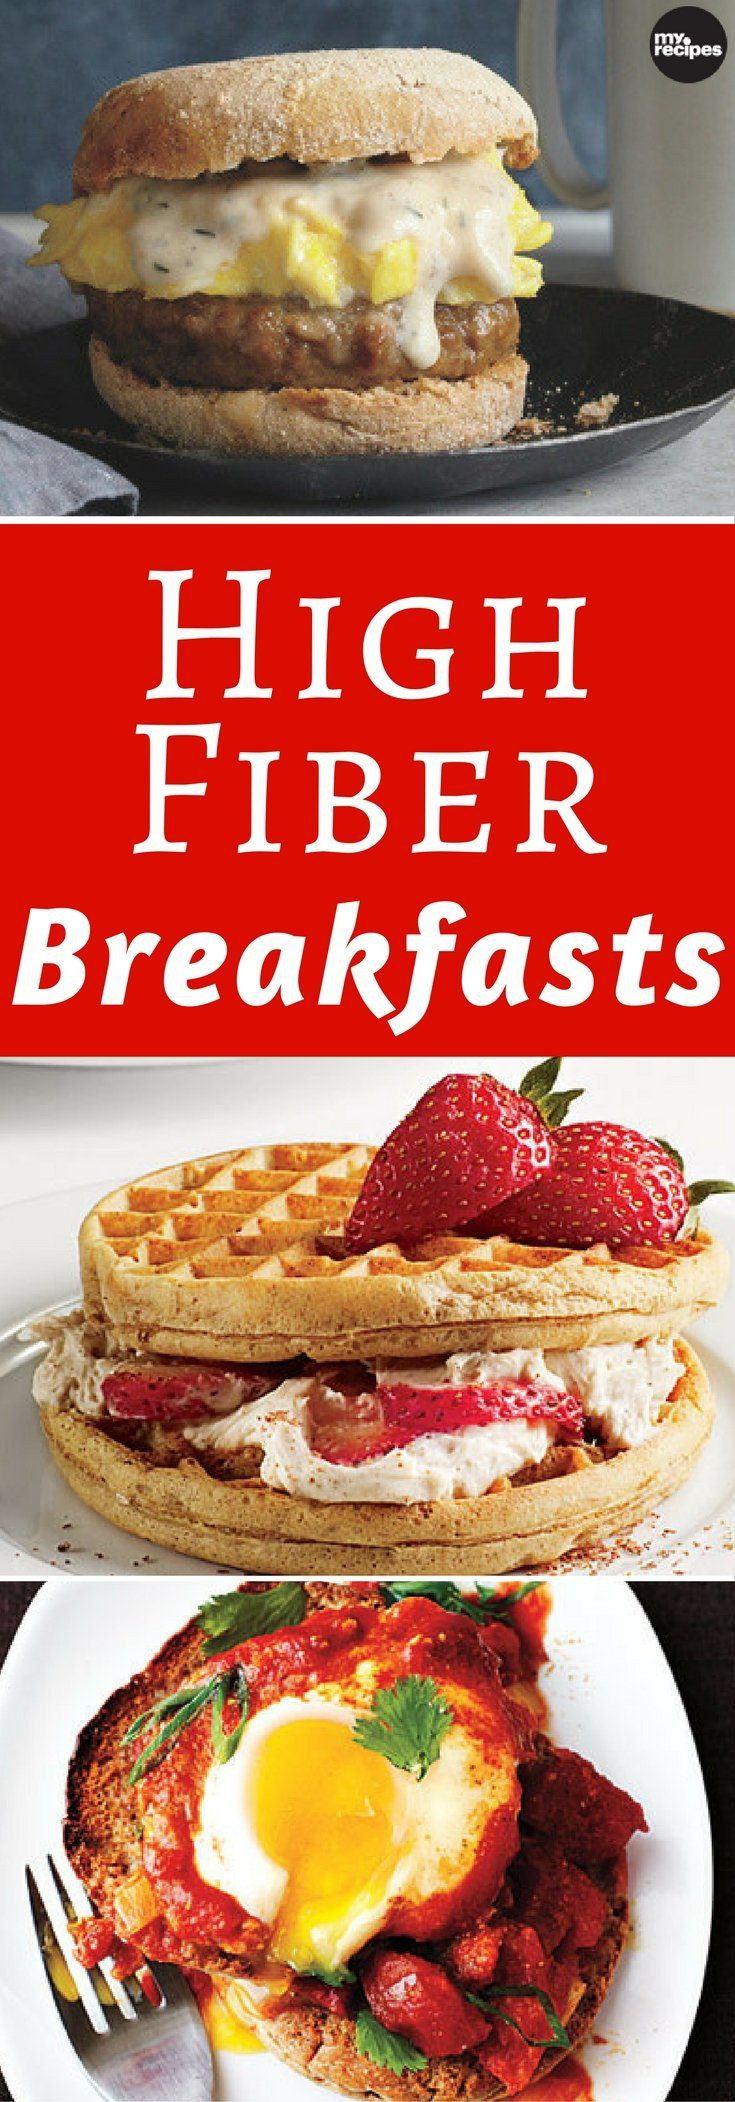 High Fiber Breakfast Recipes
 366 best Breakfast and Brunch images on Pinterest